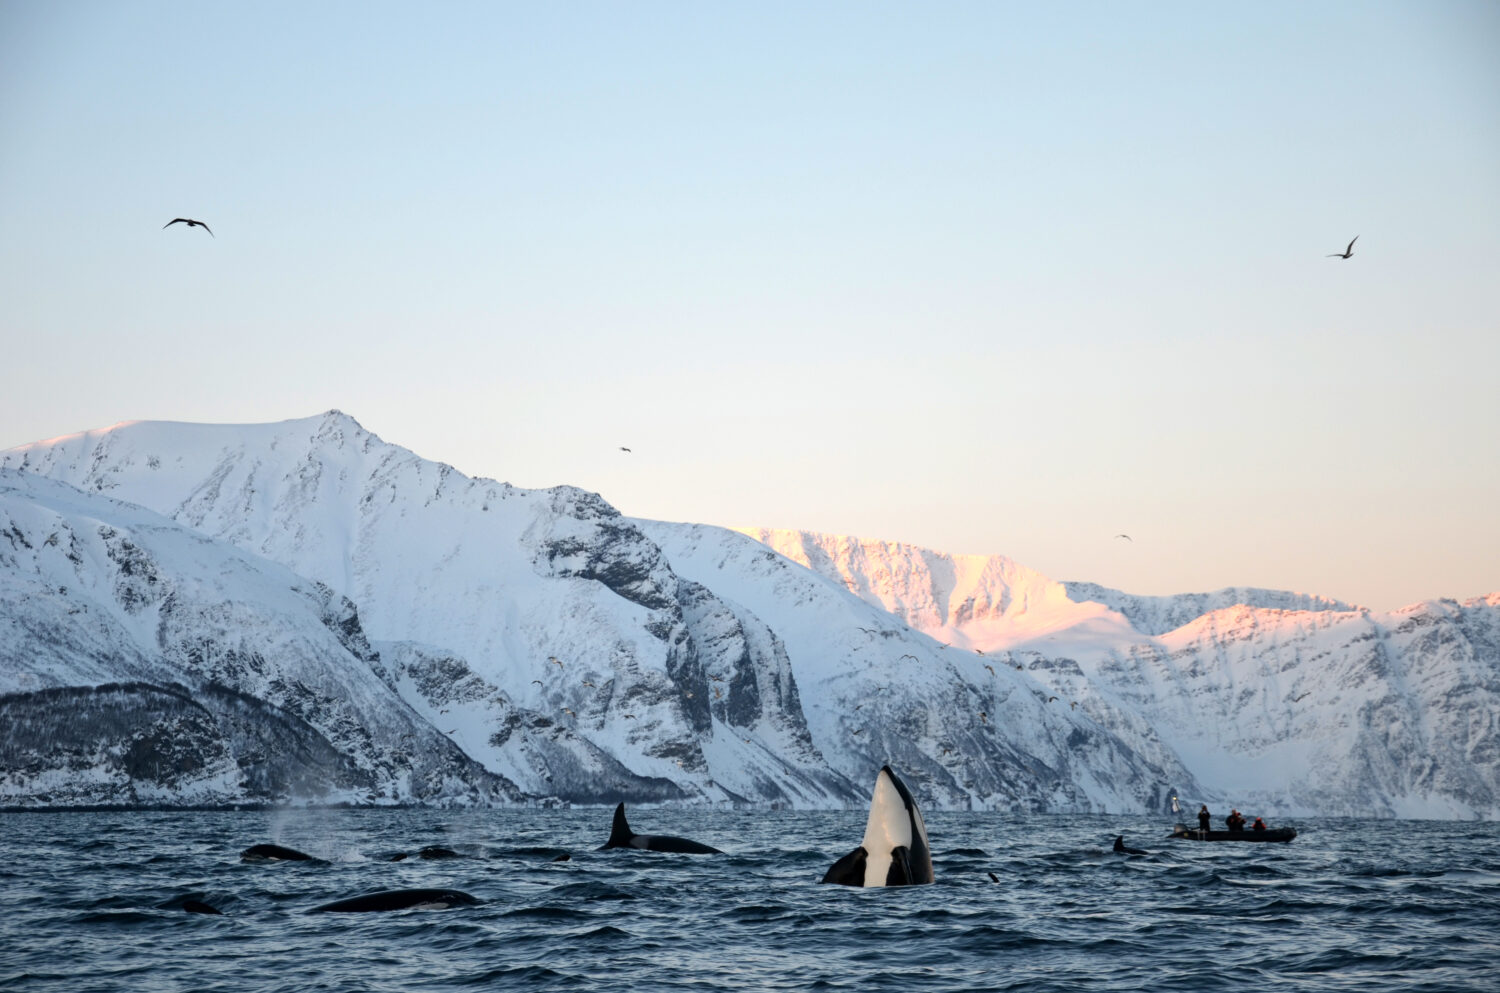 Bellissima spia orca che salta nei fiordi norvegesi.